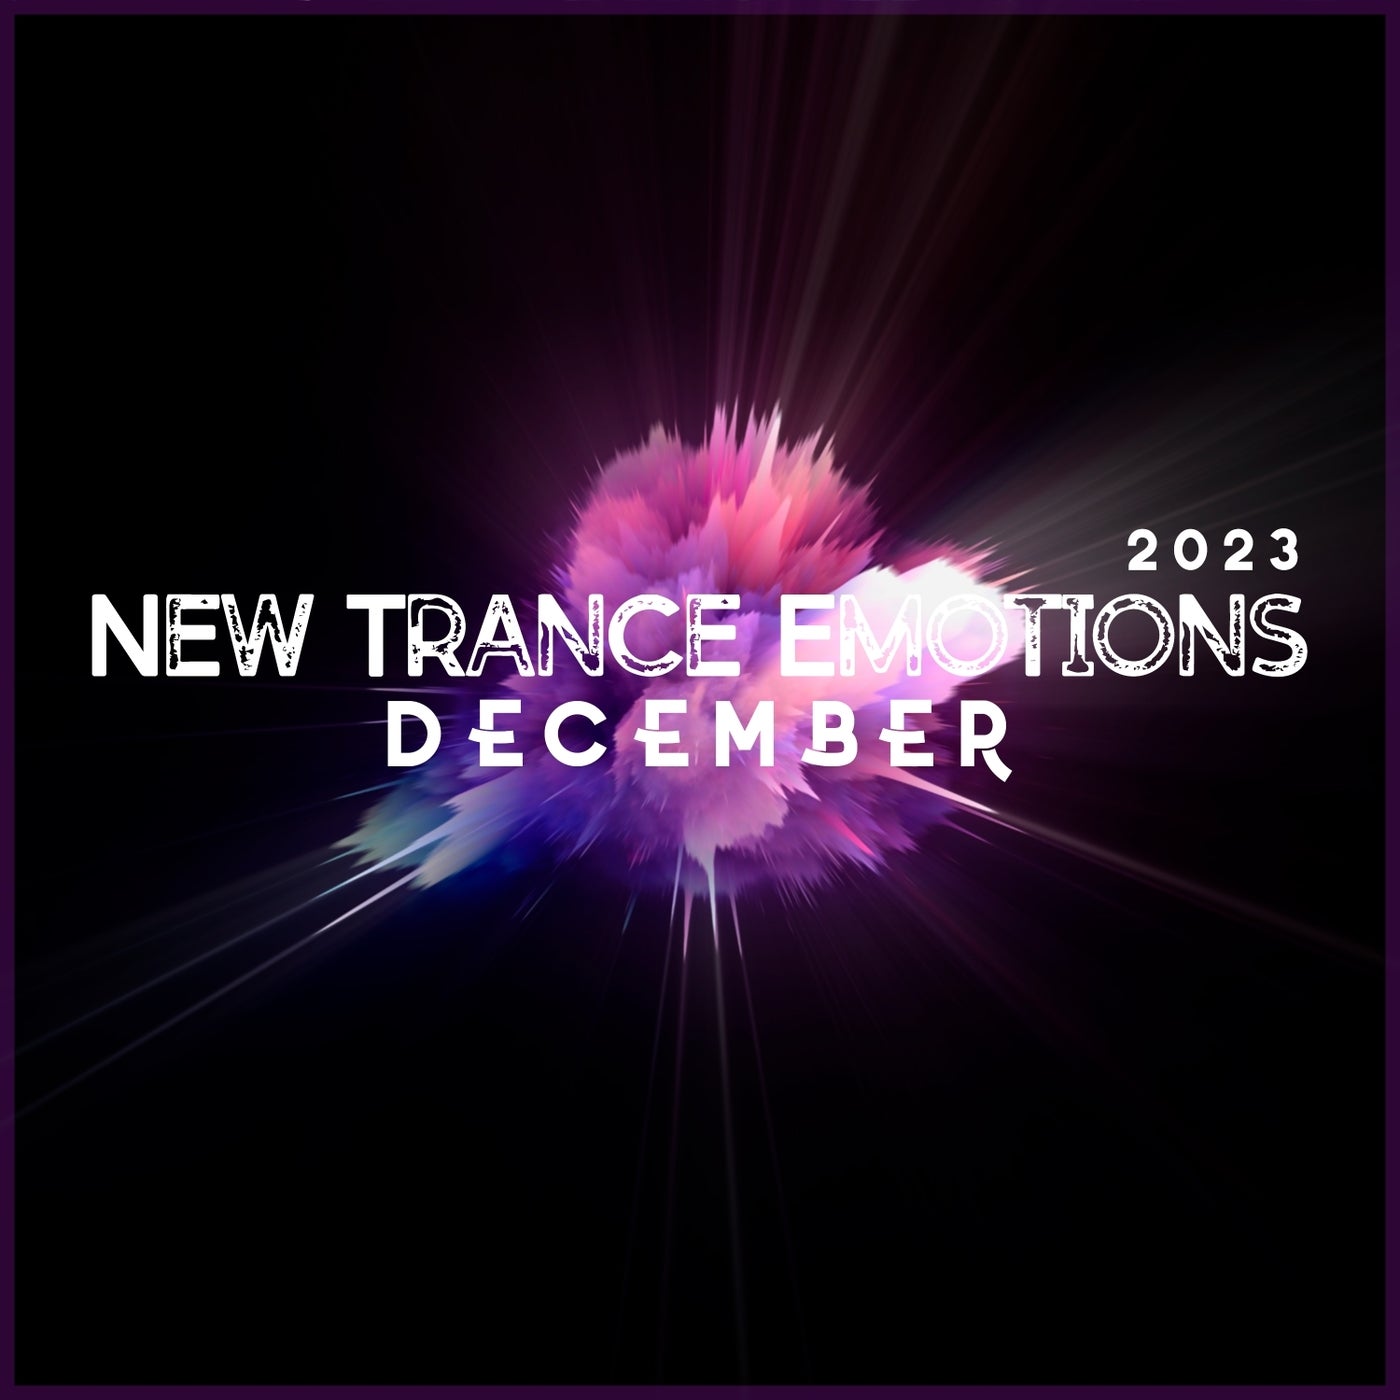 New Trance Emotions December 2023